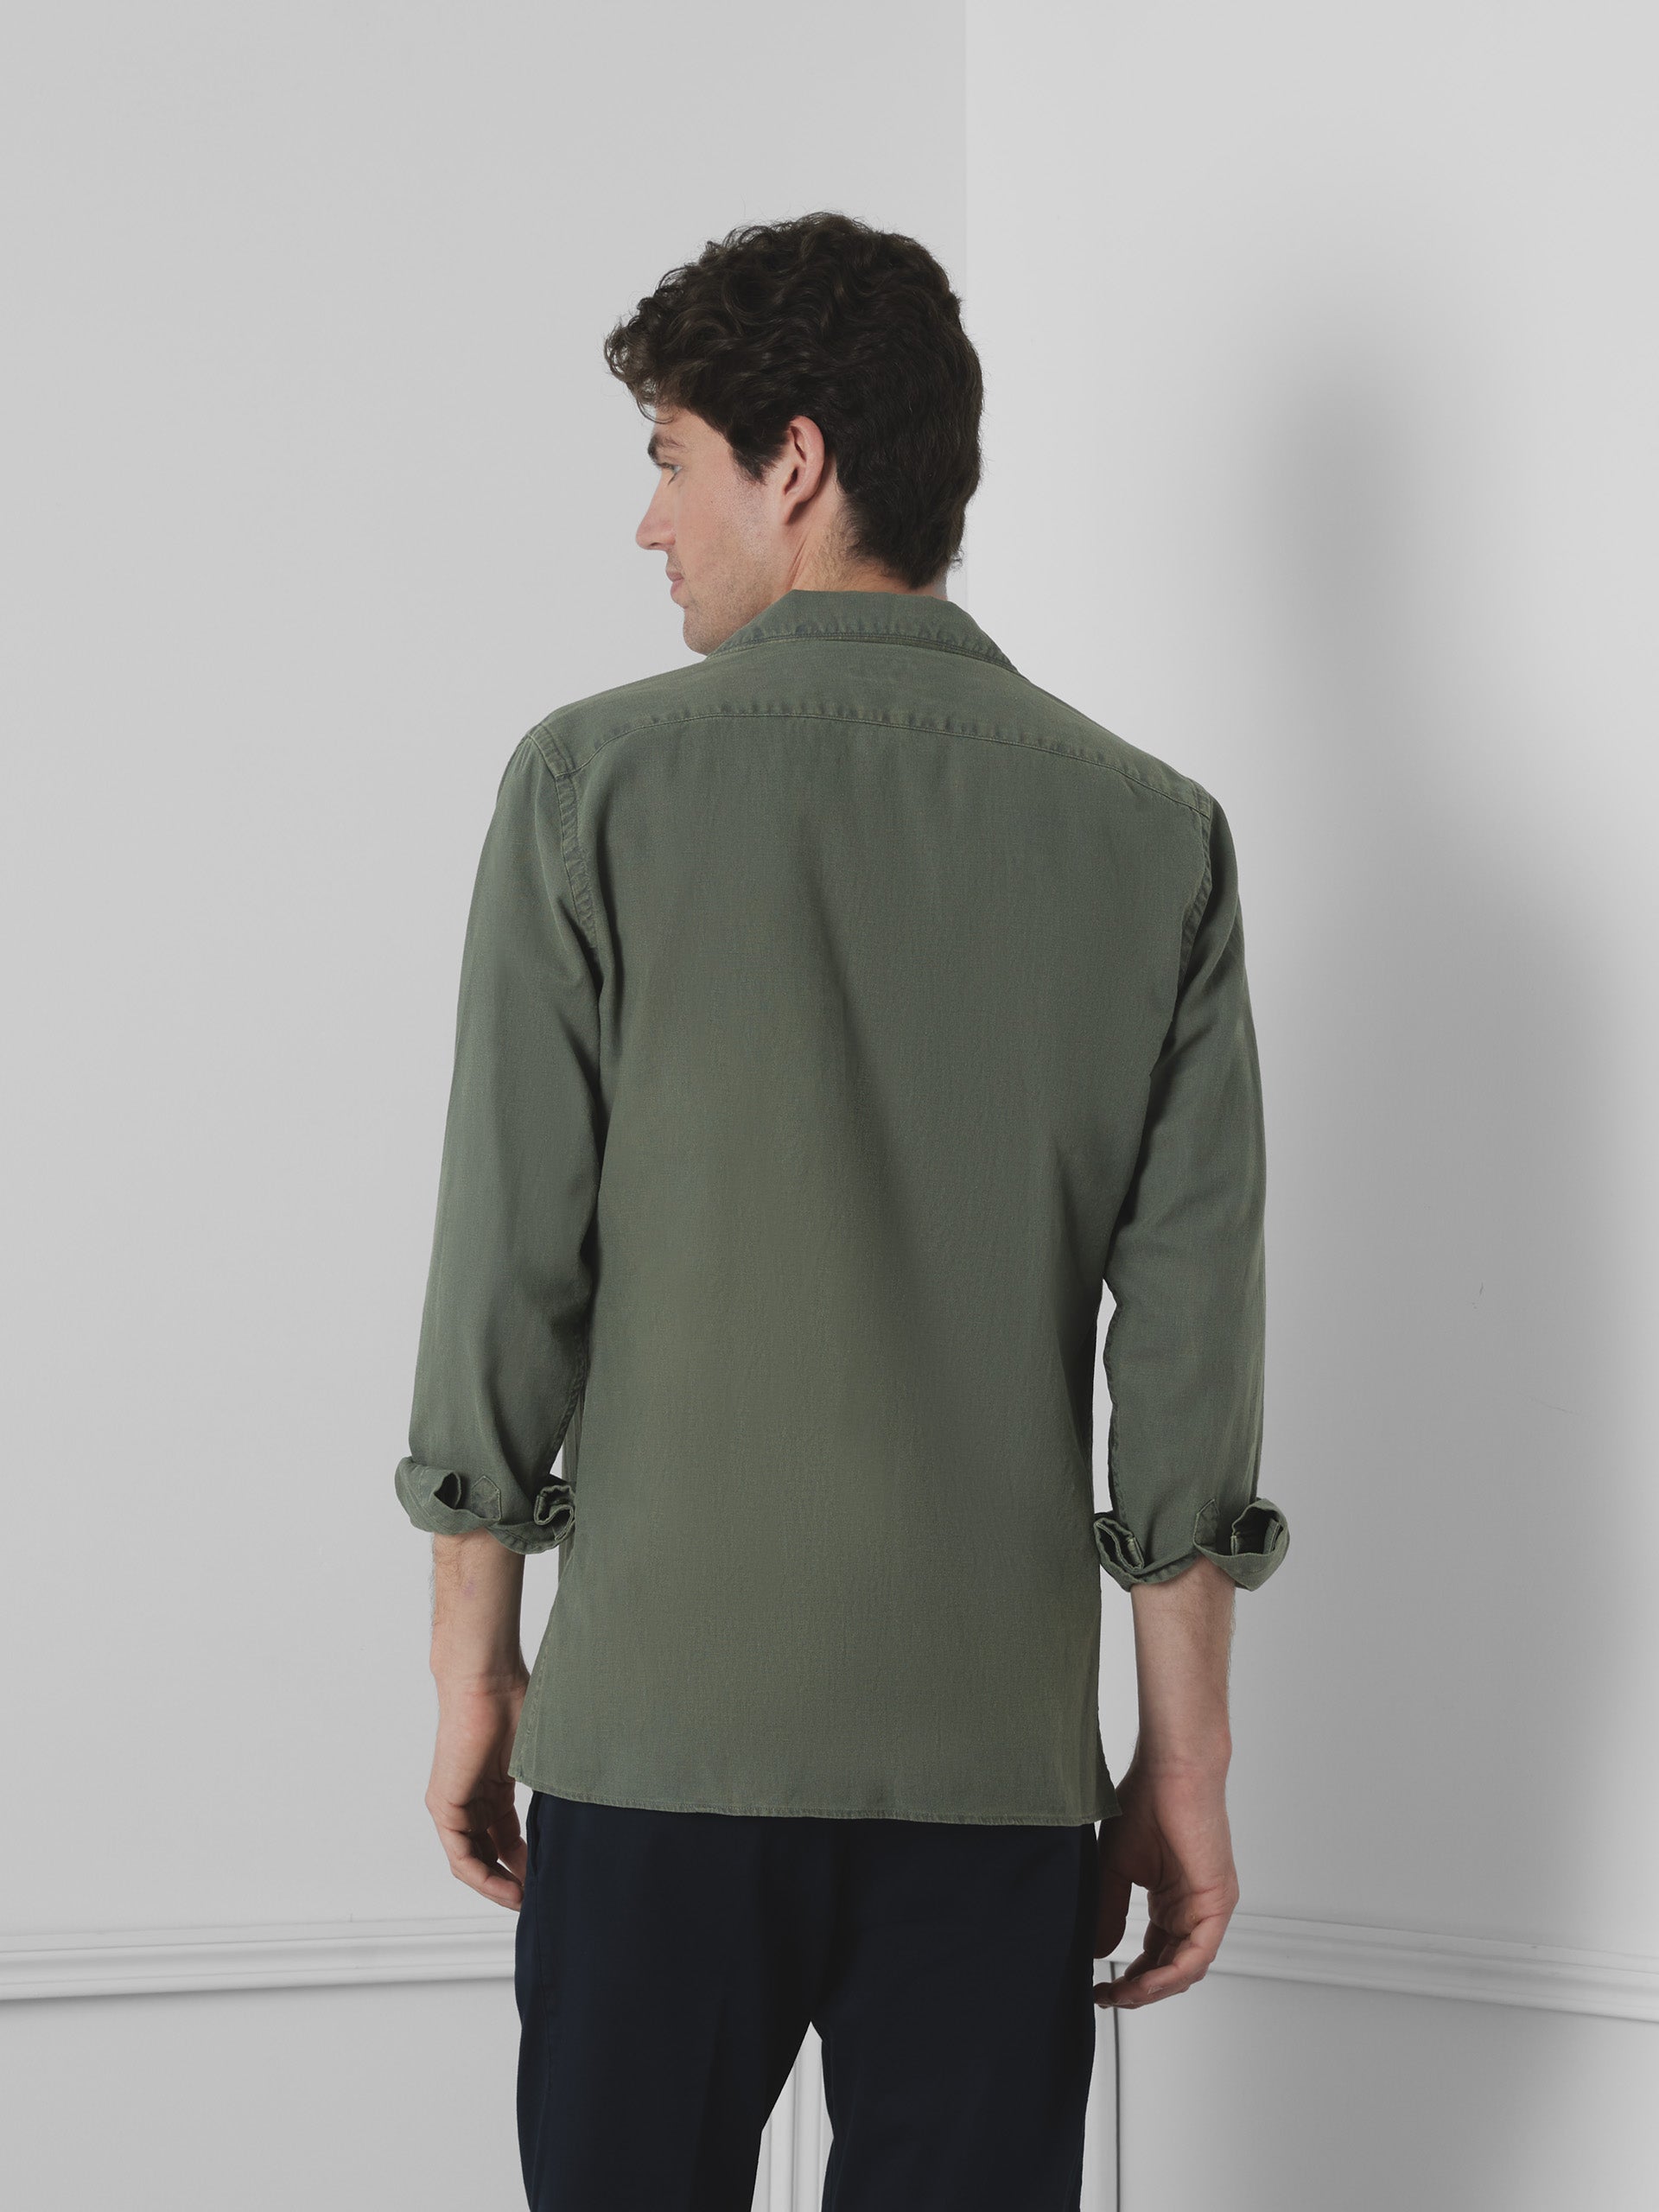 Unique green overshirt